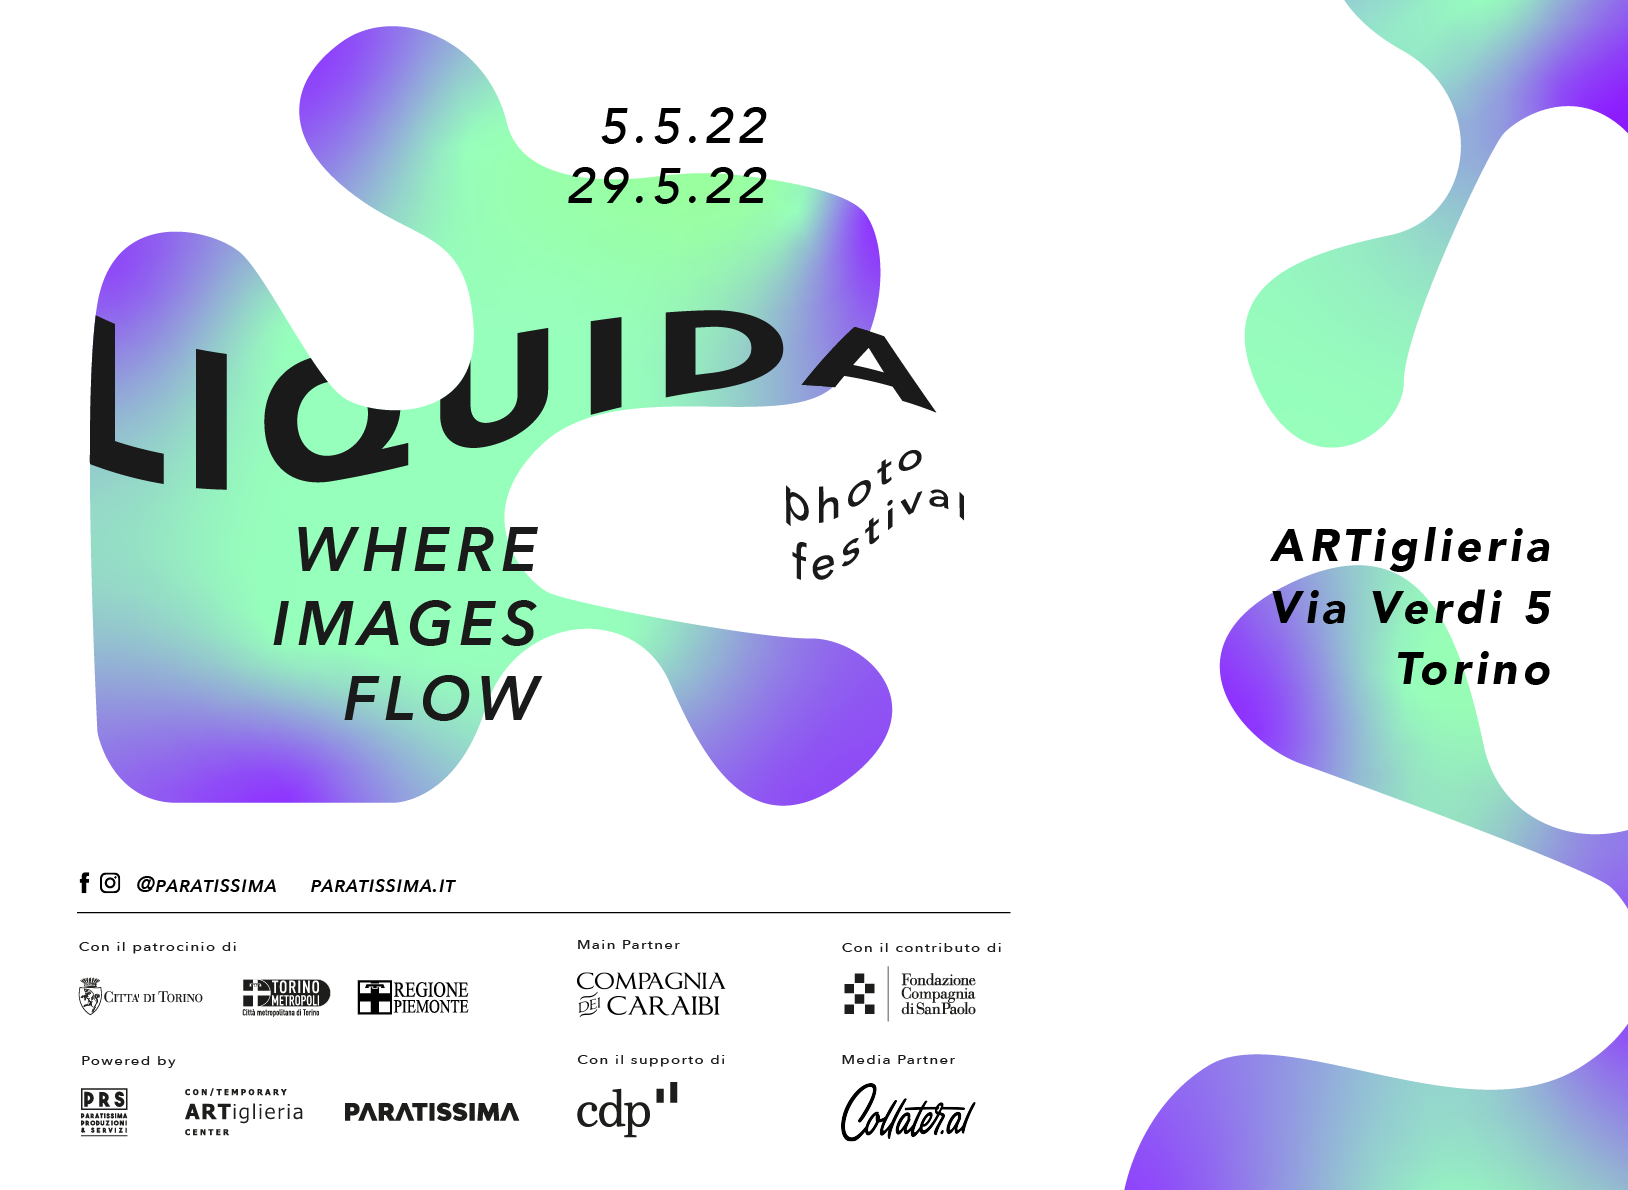 Liquida Photofestival - Where Images Flow